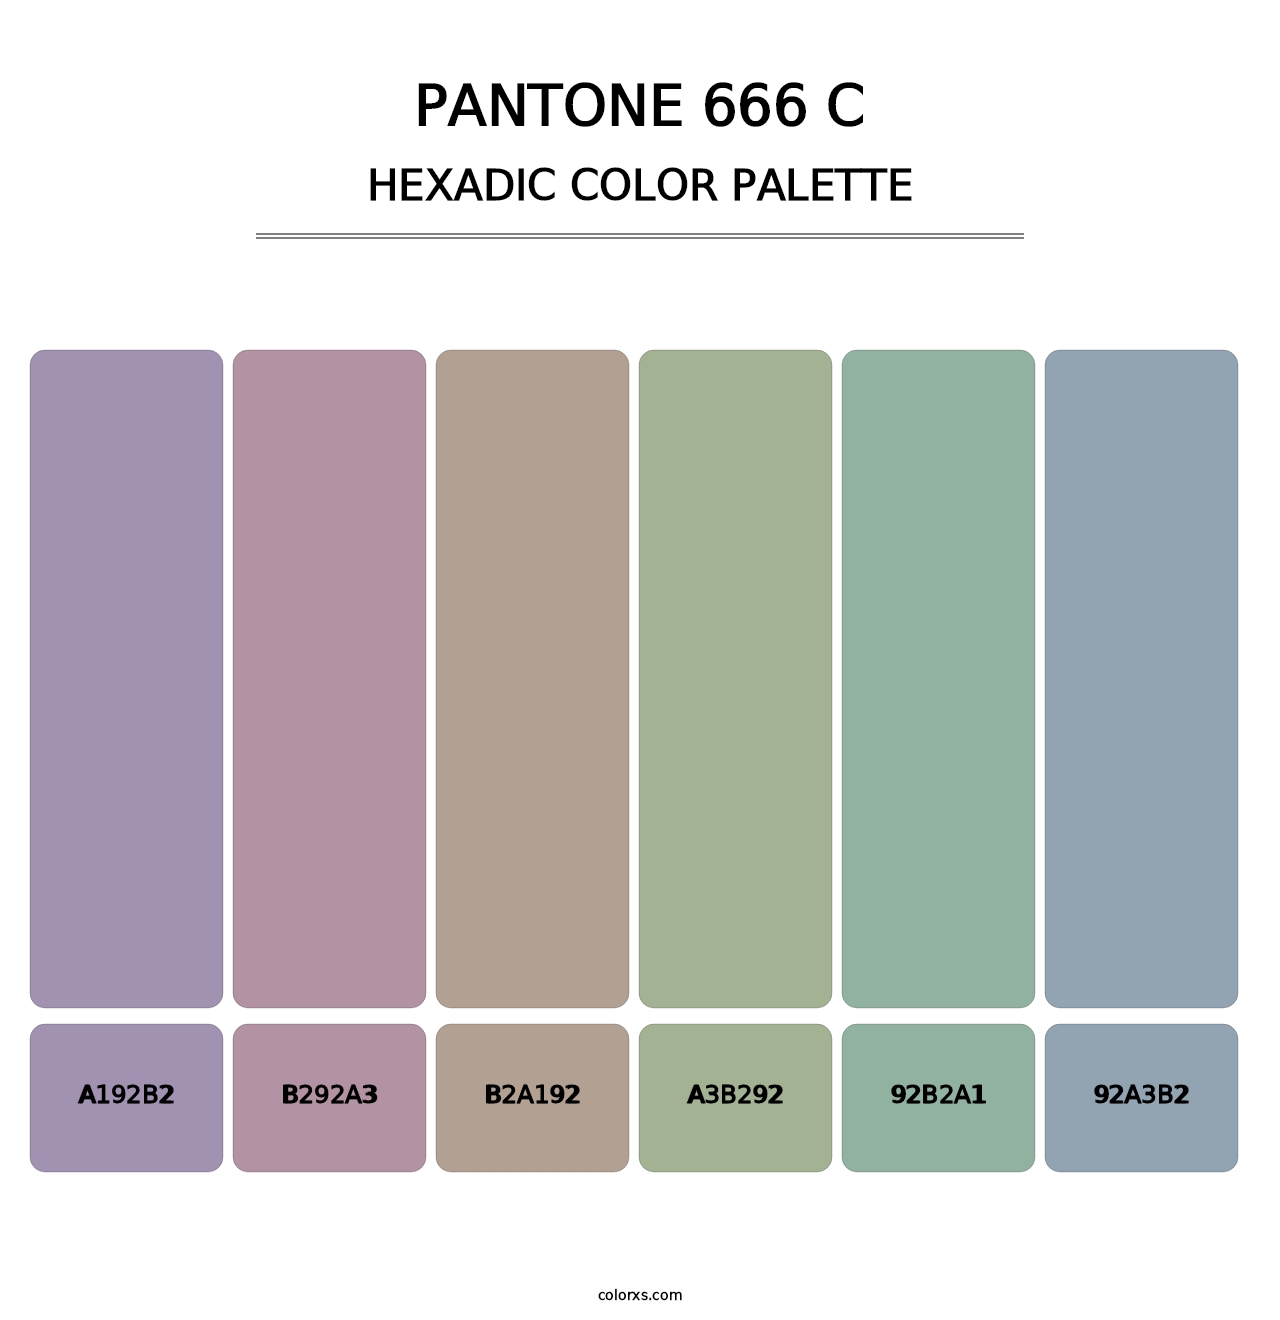 PANTONE 666 C - Hexadic Color Palette